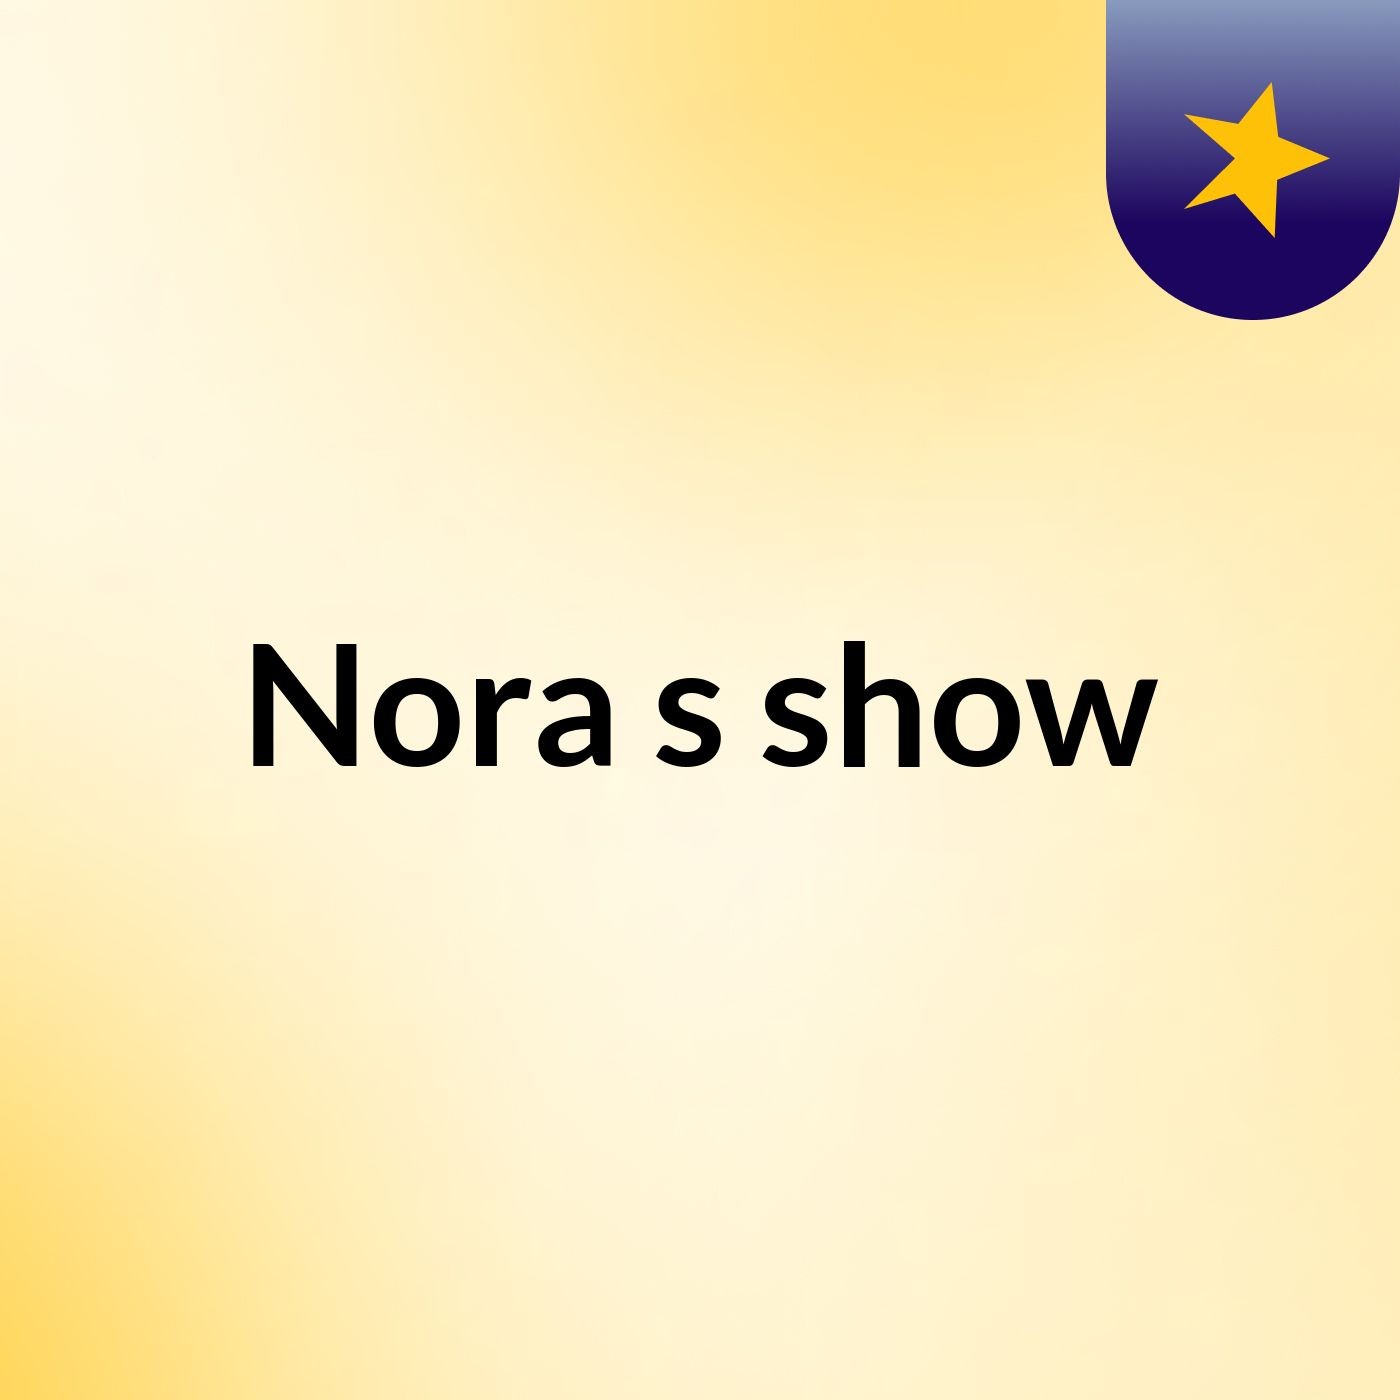 Nora's show